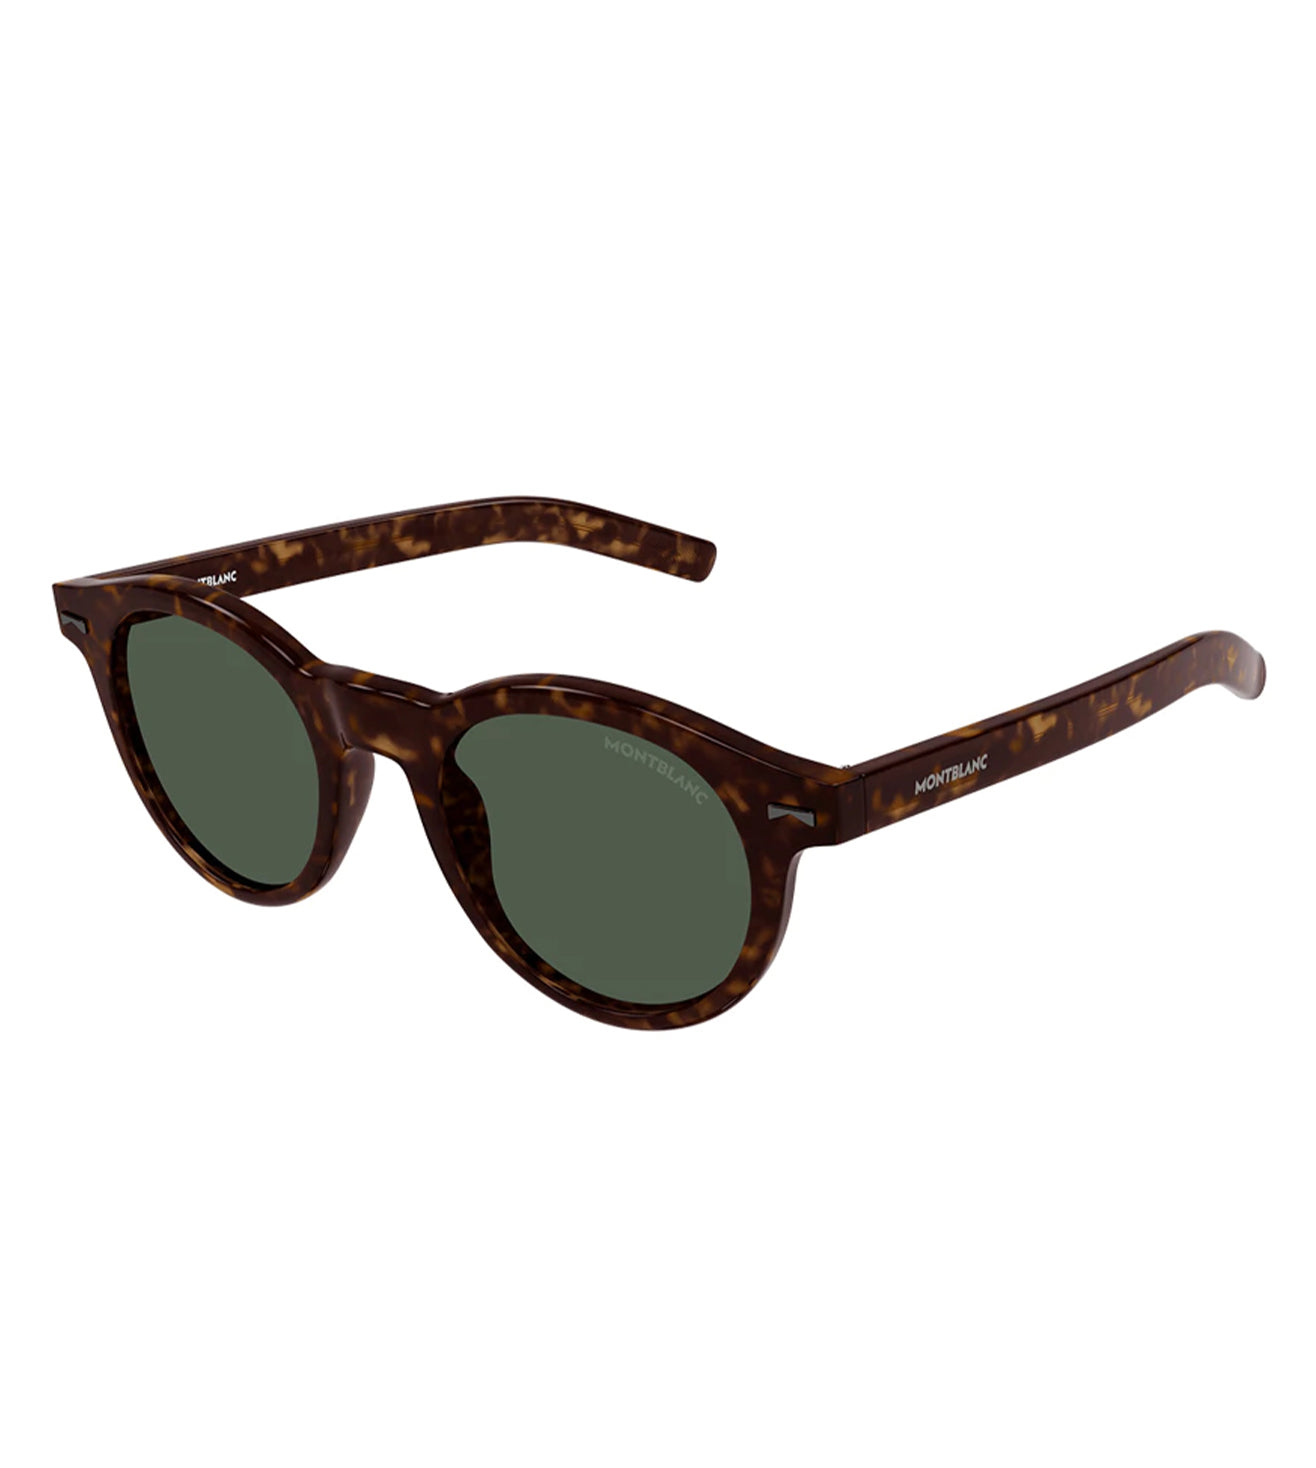 Montblanc Men's Green Round Sunglasses